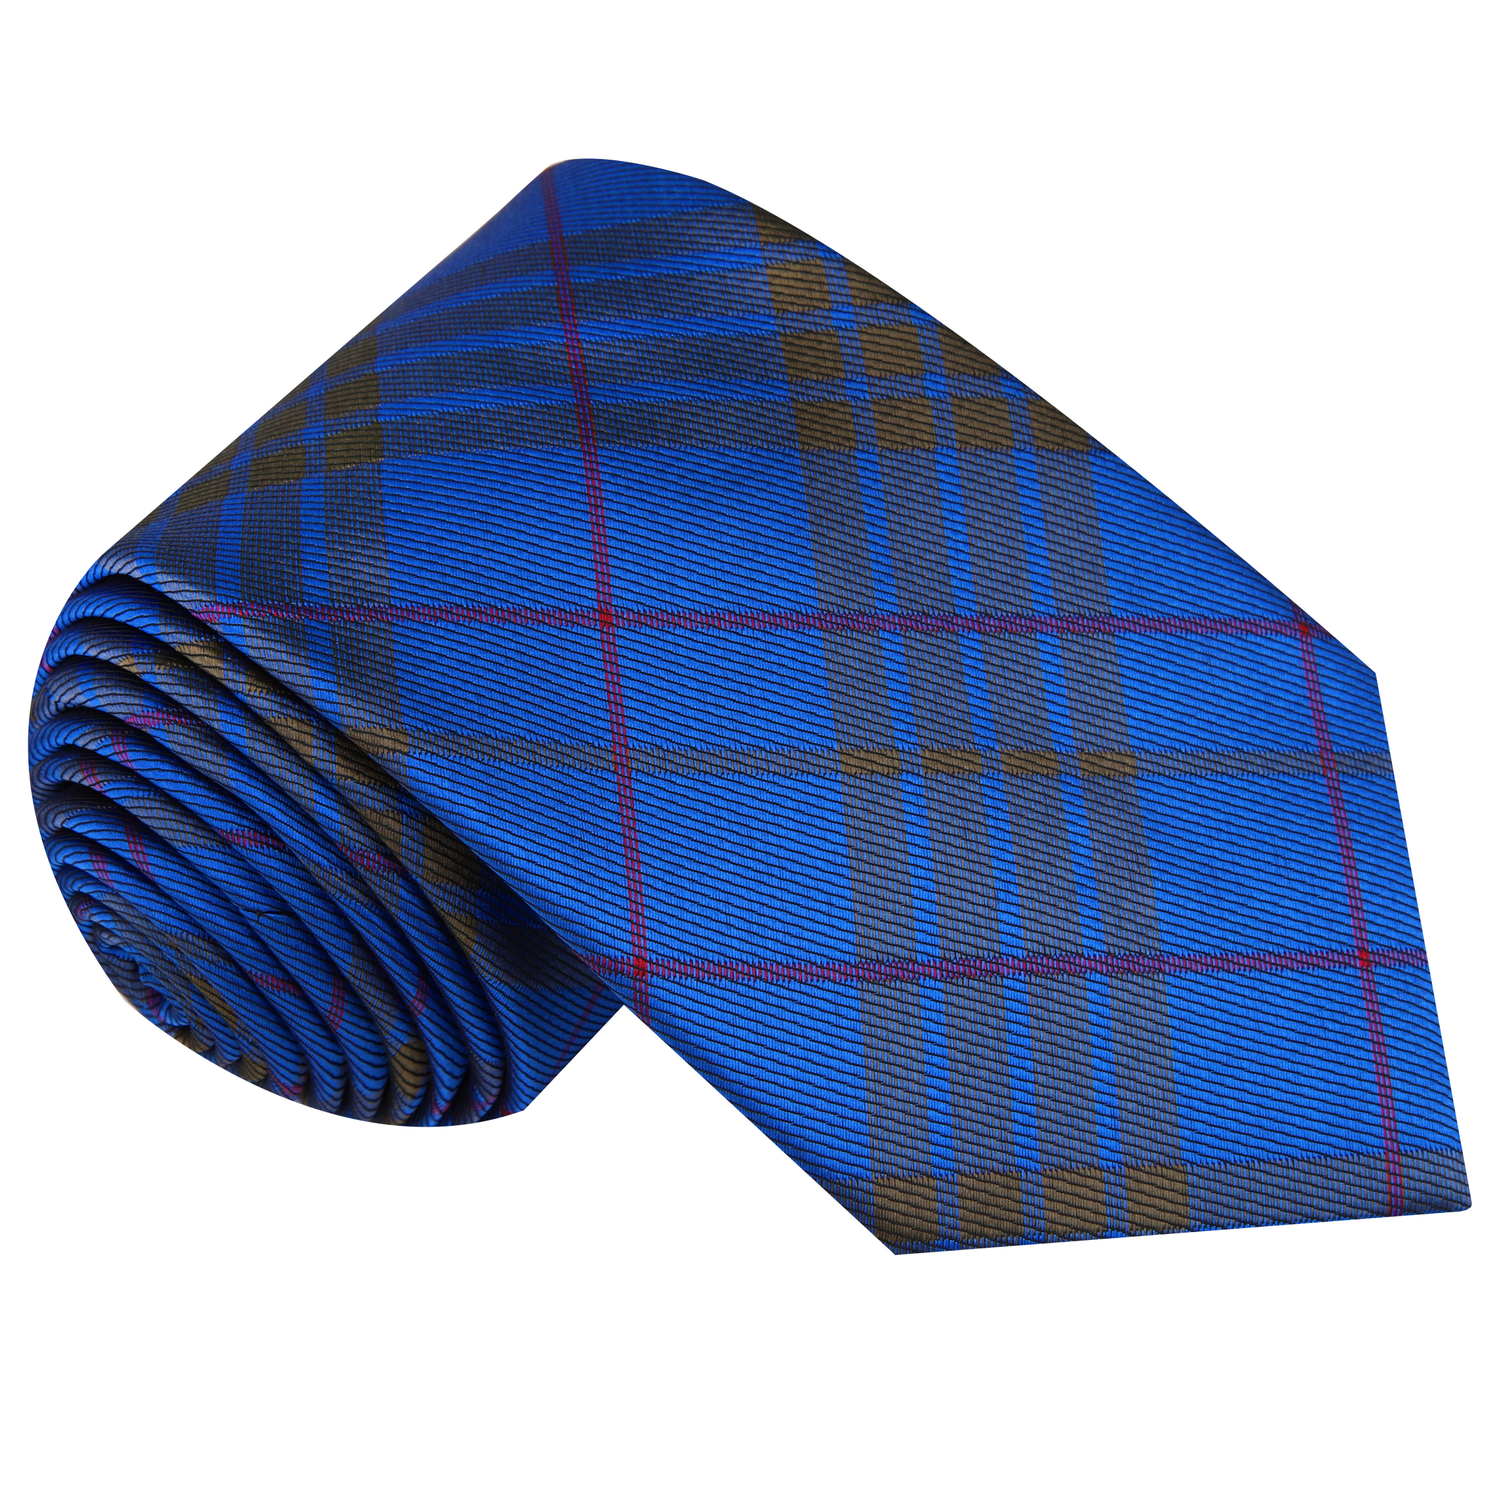 Single View: Blue, Olive Brown Plaid Necktie